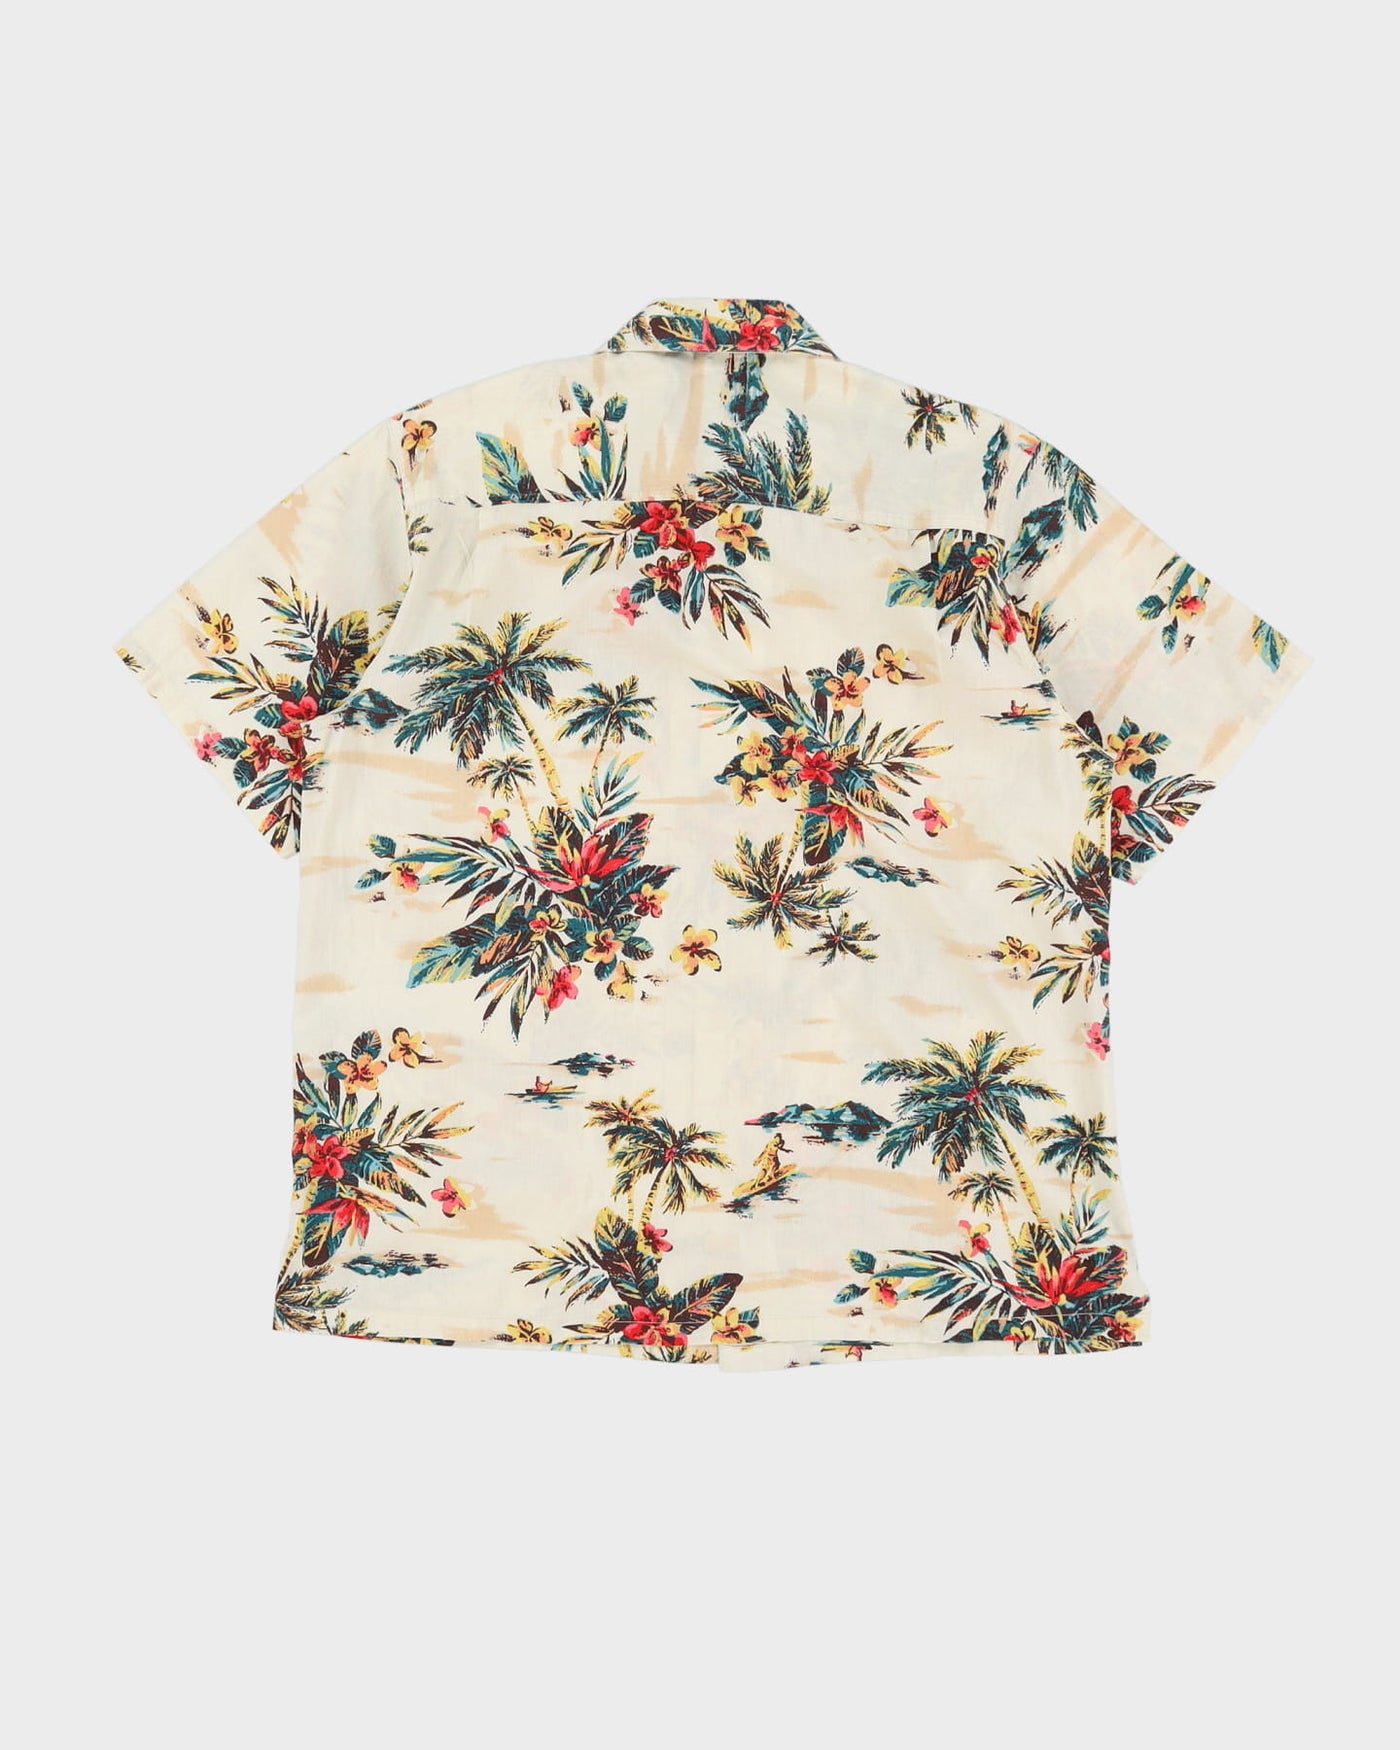 00s Beige Patterned Hawaiian Shirt - M